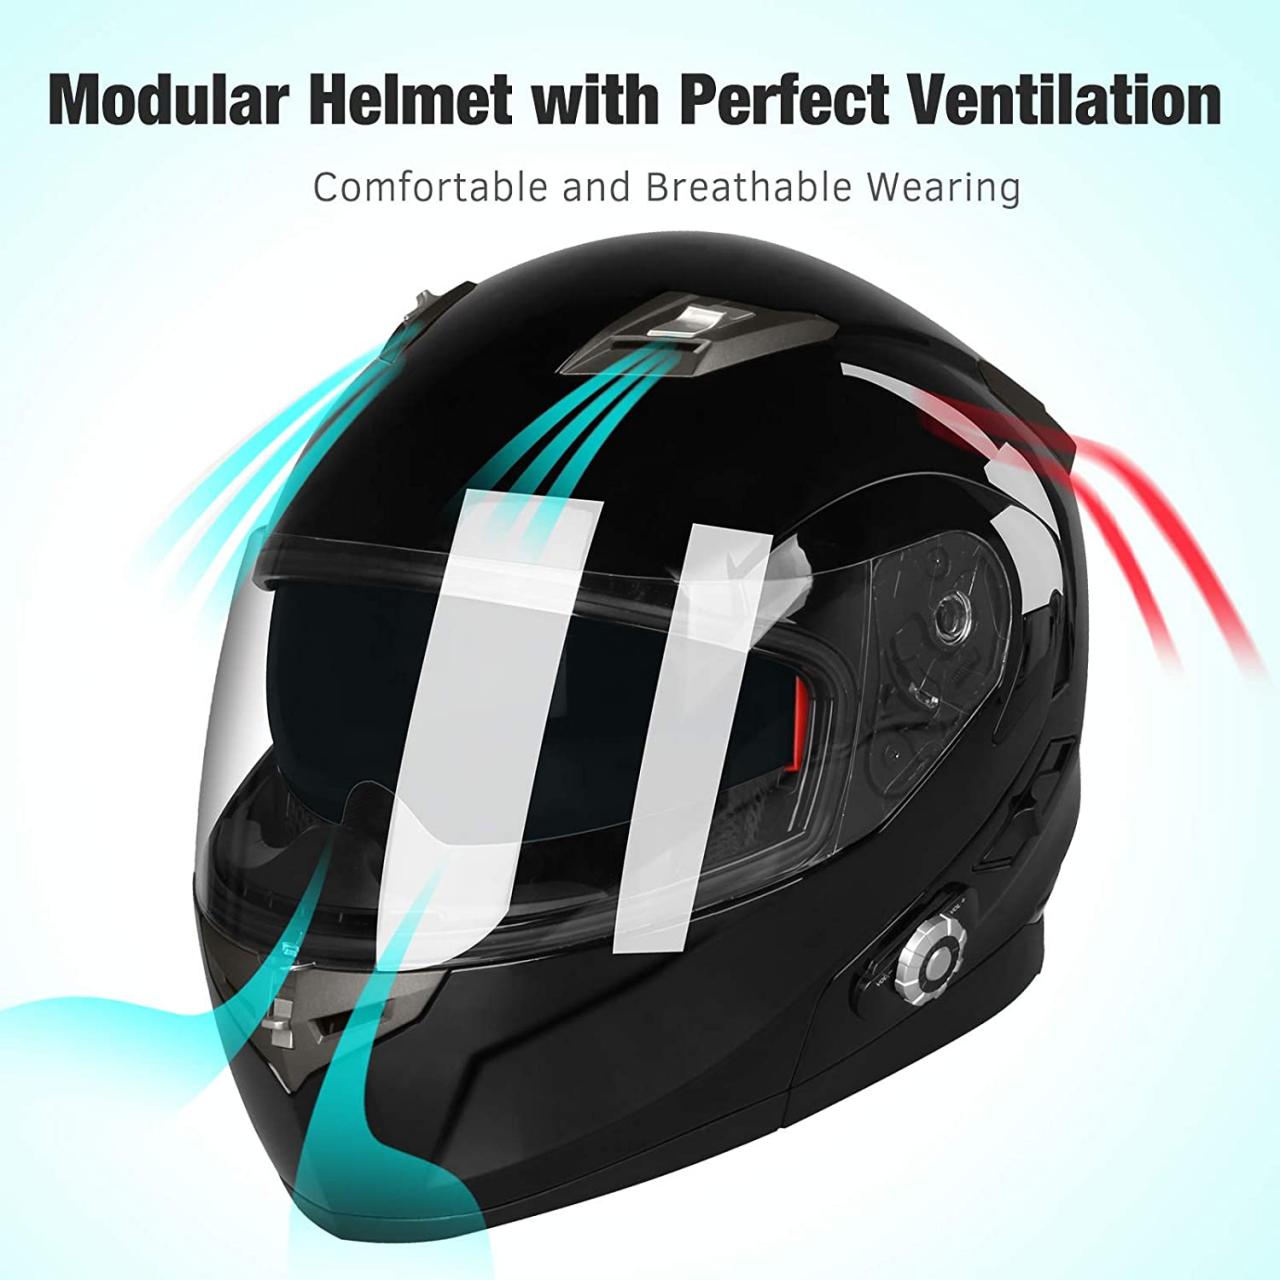 Buy FreedConn Motorcycle Bluetooth Helmet, BM2-S Flip Up Modular Bluetooth  Motorcycle Helmet Voice Dial/Hands-Free Call/ 500M/ 2-3 Riders/ MP3/ FM/DOT Motorcycle  Helmet with Bluetooth 3.0 Online in Hong Kong. B01MXIEF5X